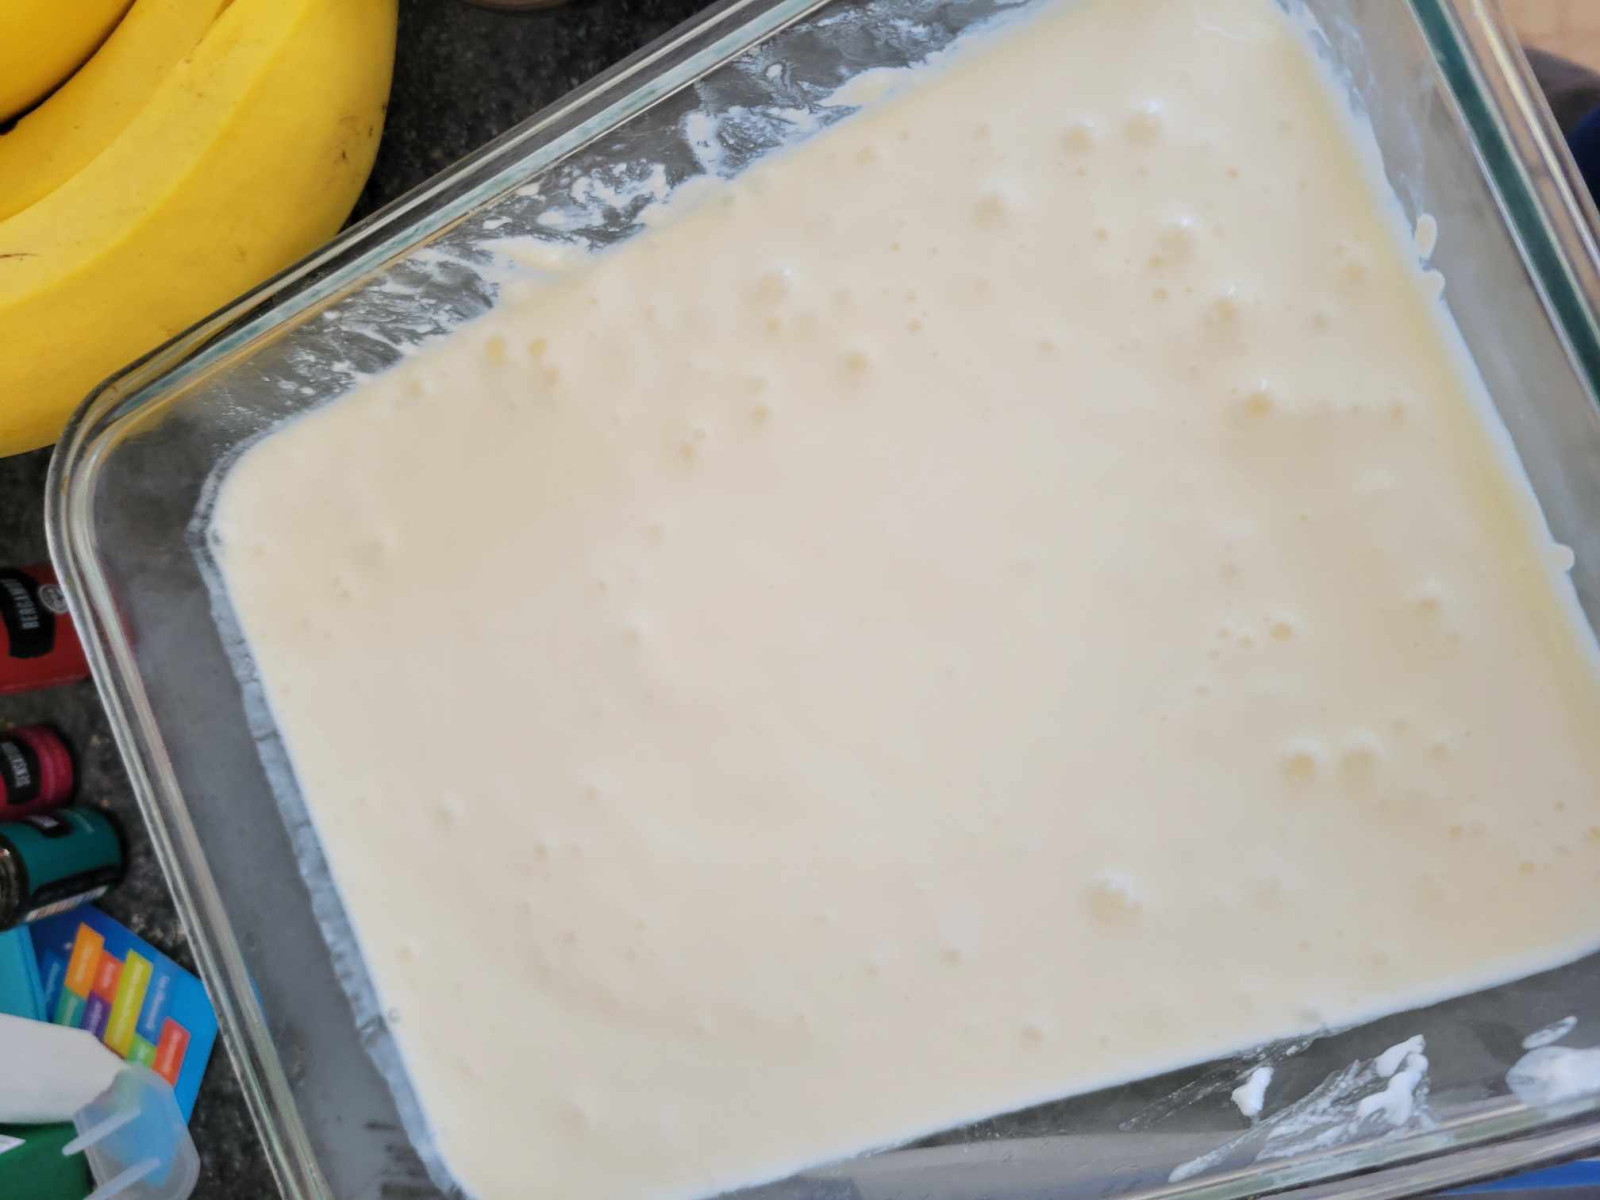 Creamy Goodness: How to Make Homemade Greek Yogurt